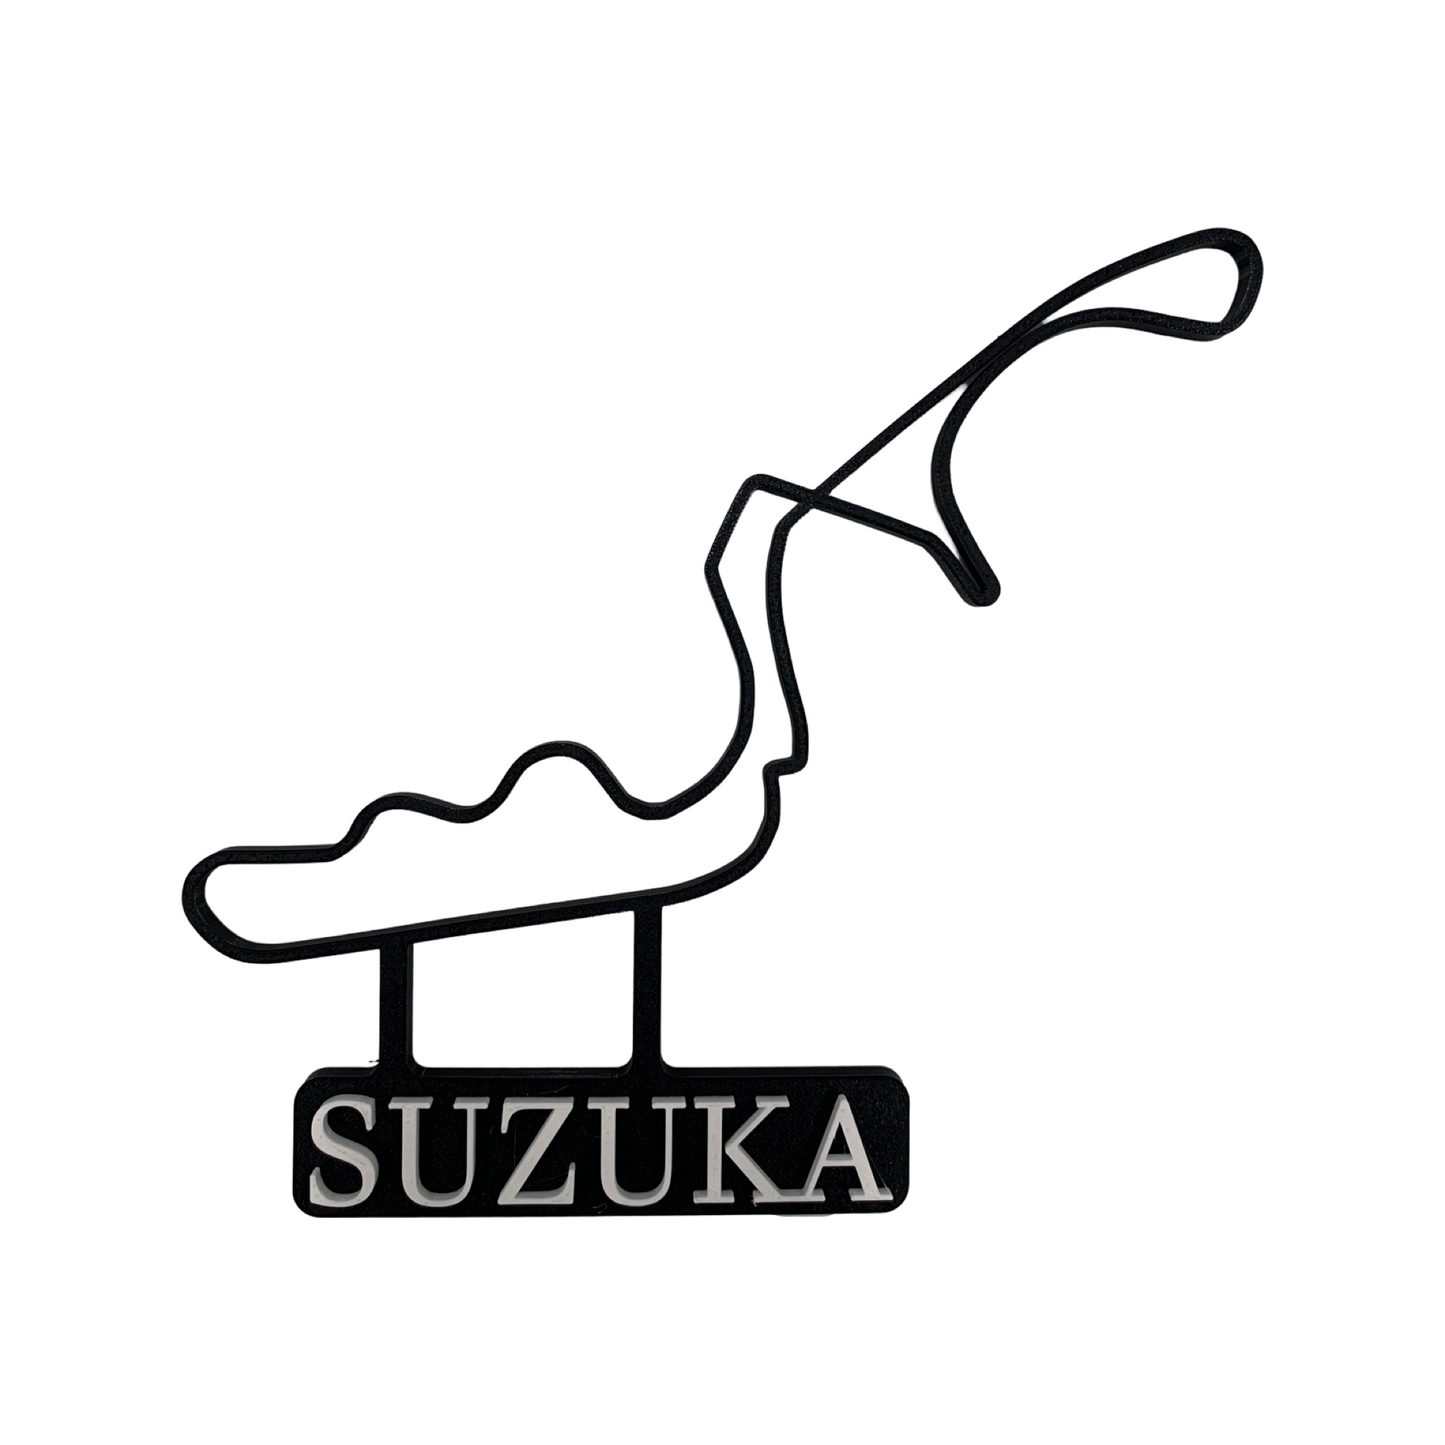 3D printed F1 tracks 2021 season - Suzuka